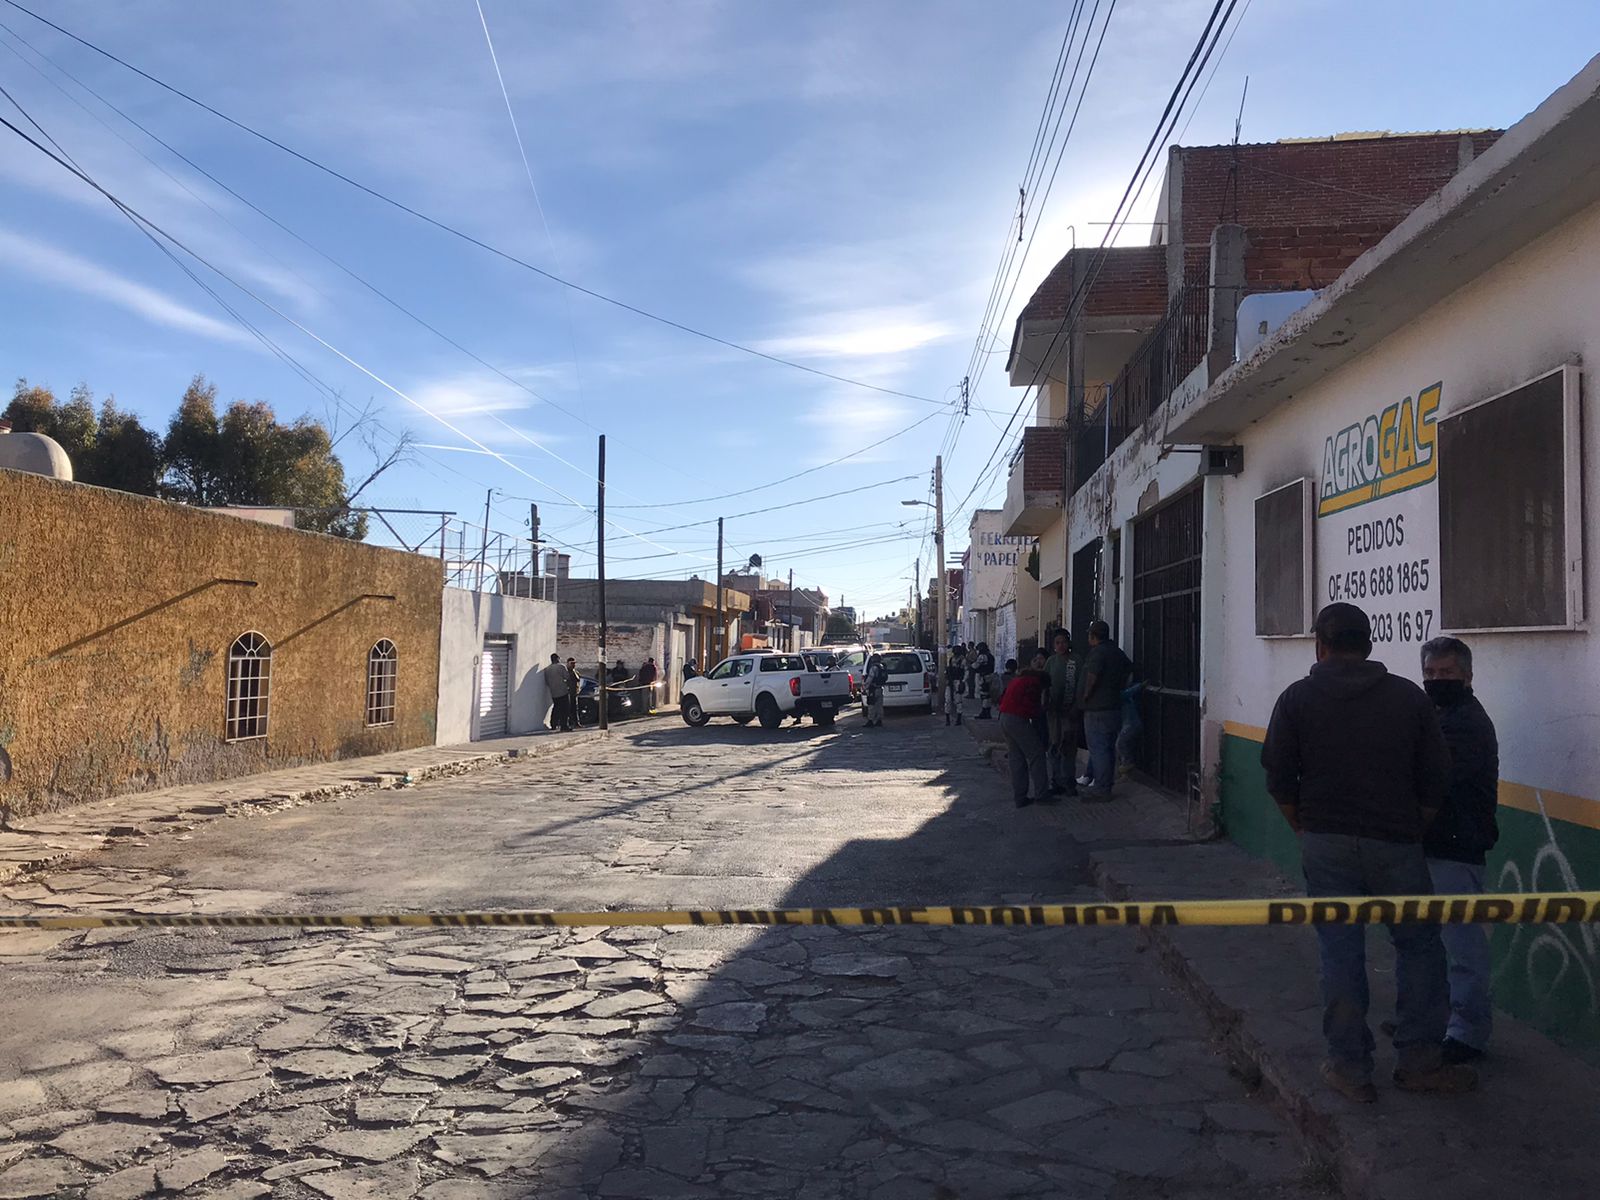 ‼️Son asesinados 2 hombres en la Lázaro Cárdenas en Zacatecas.